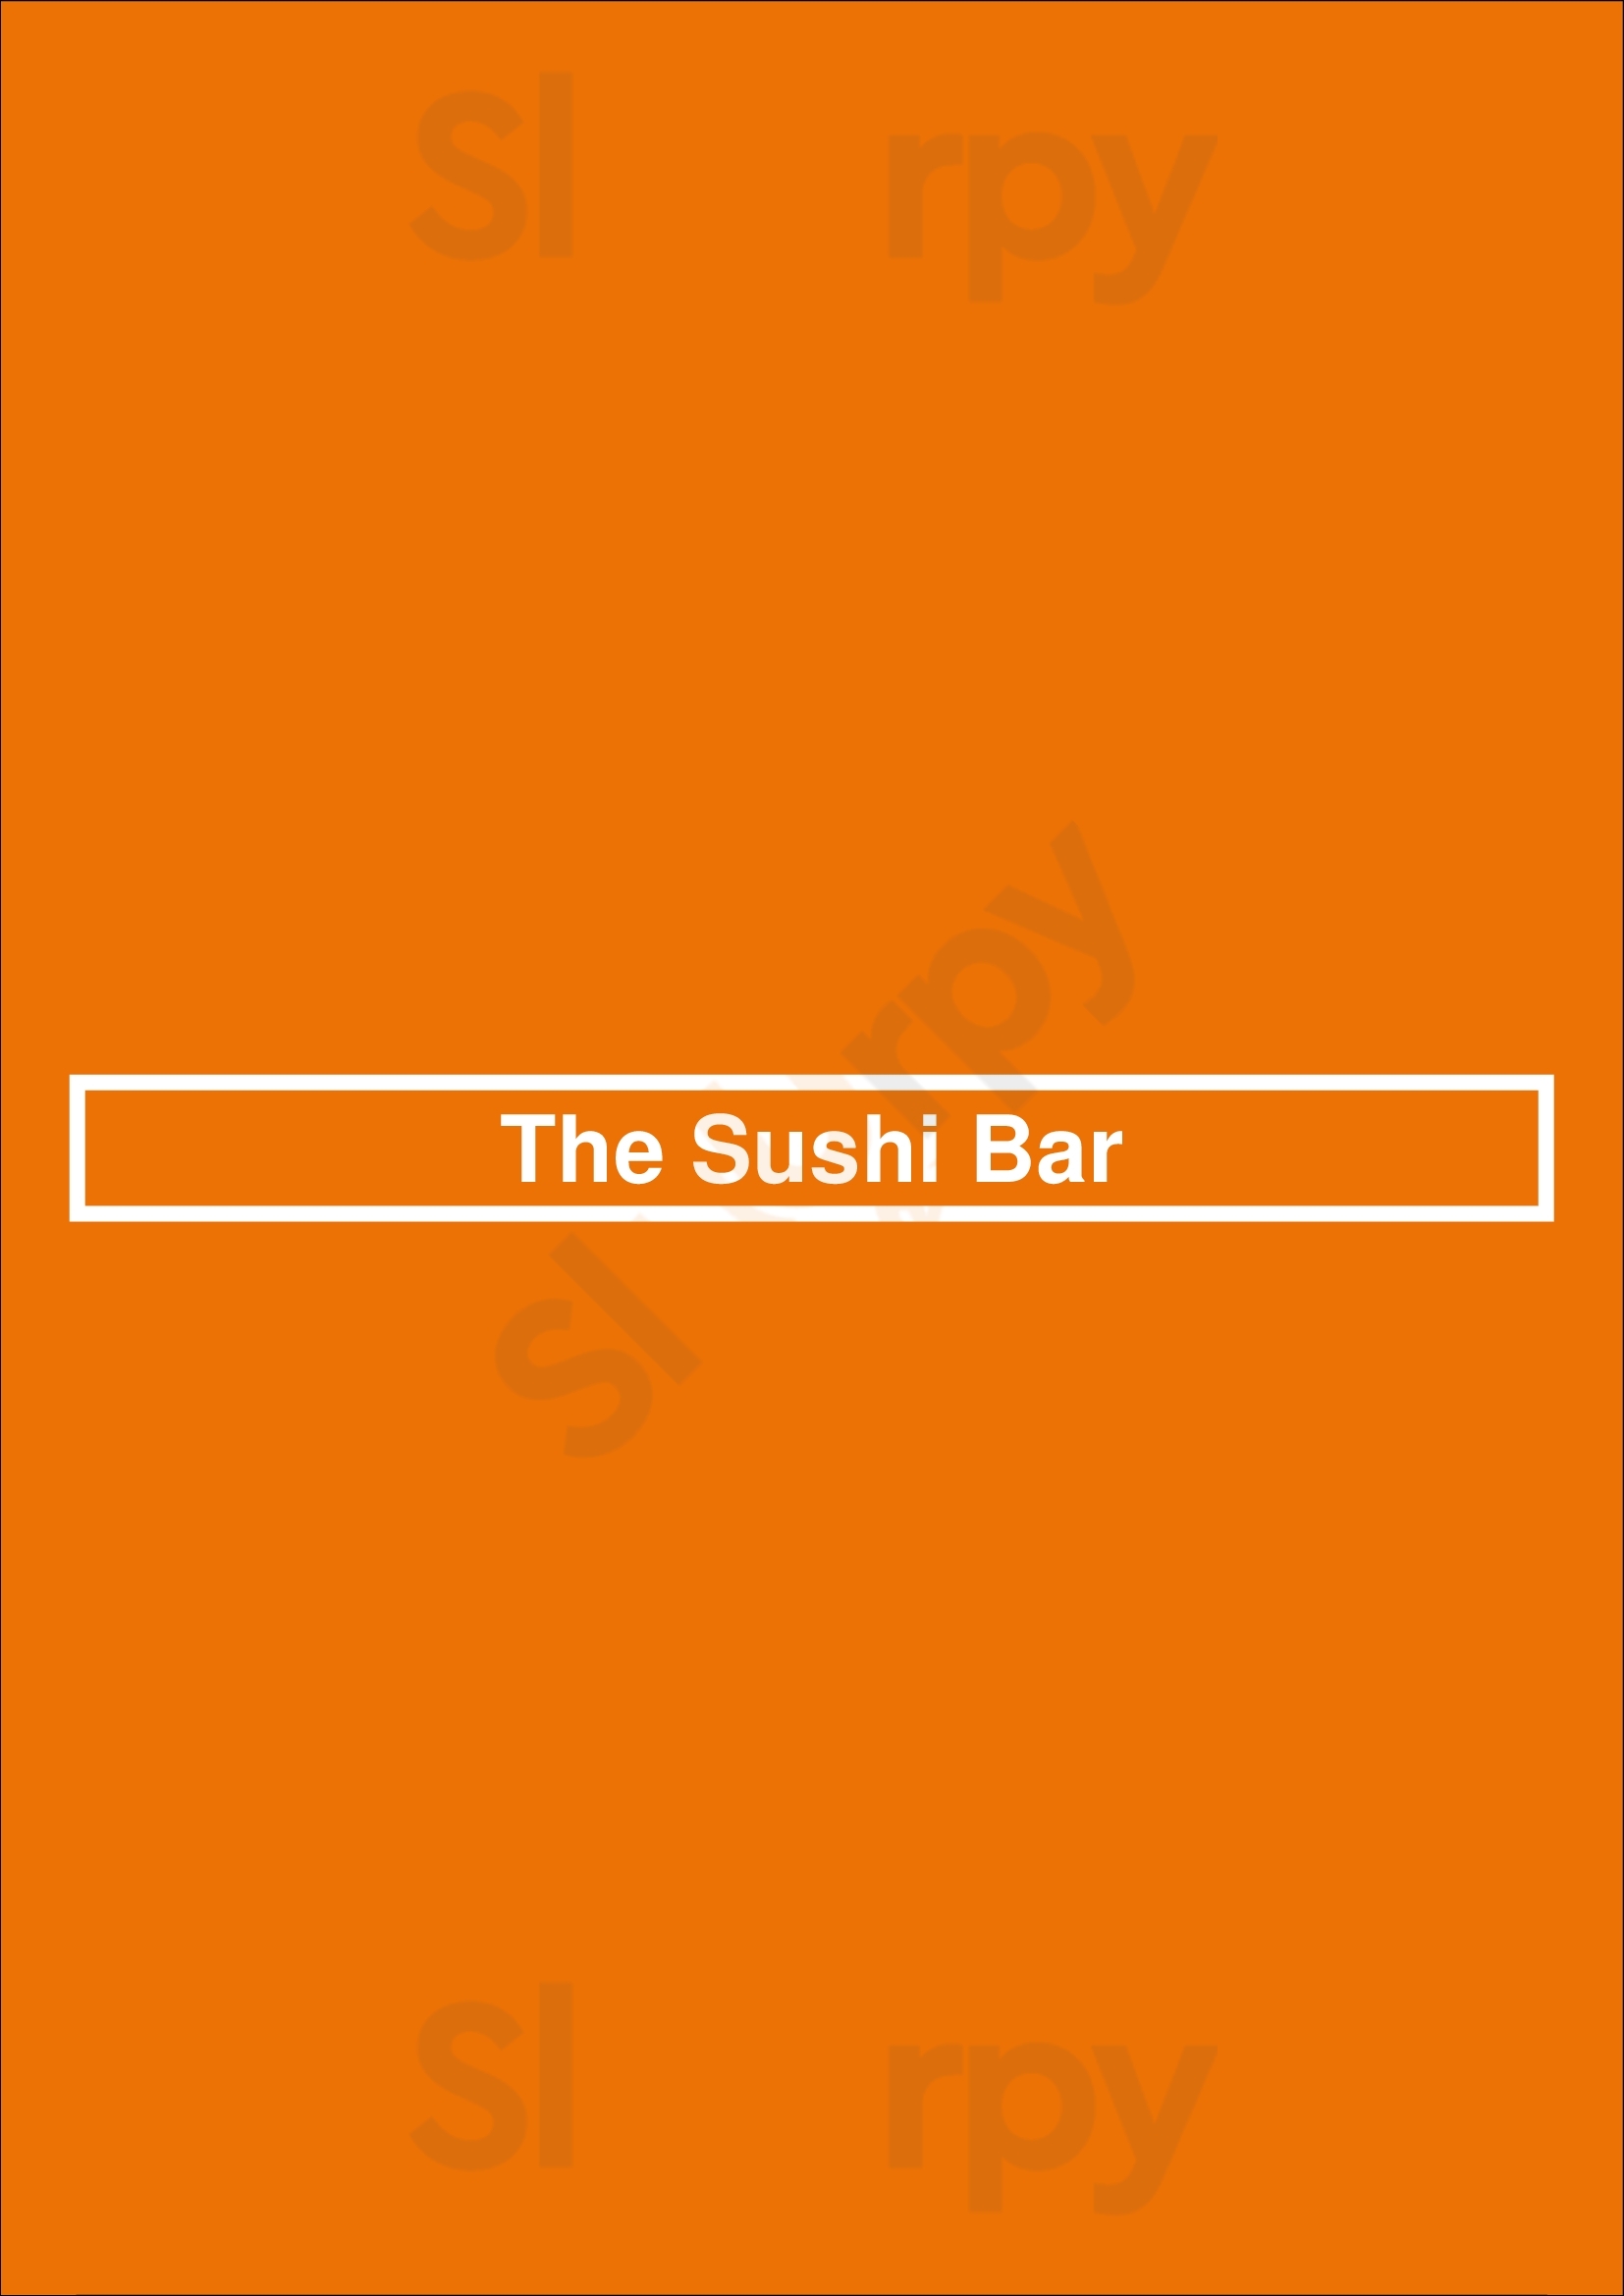 The Sushi Bar Vancouver Menu - 1